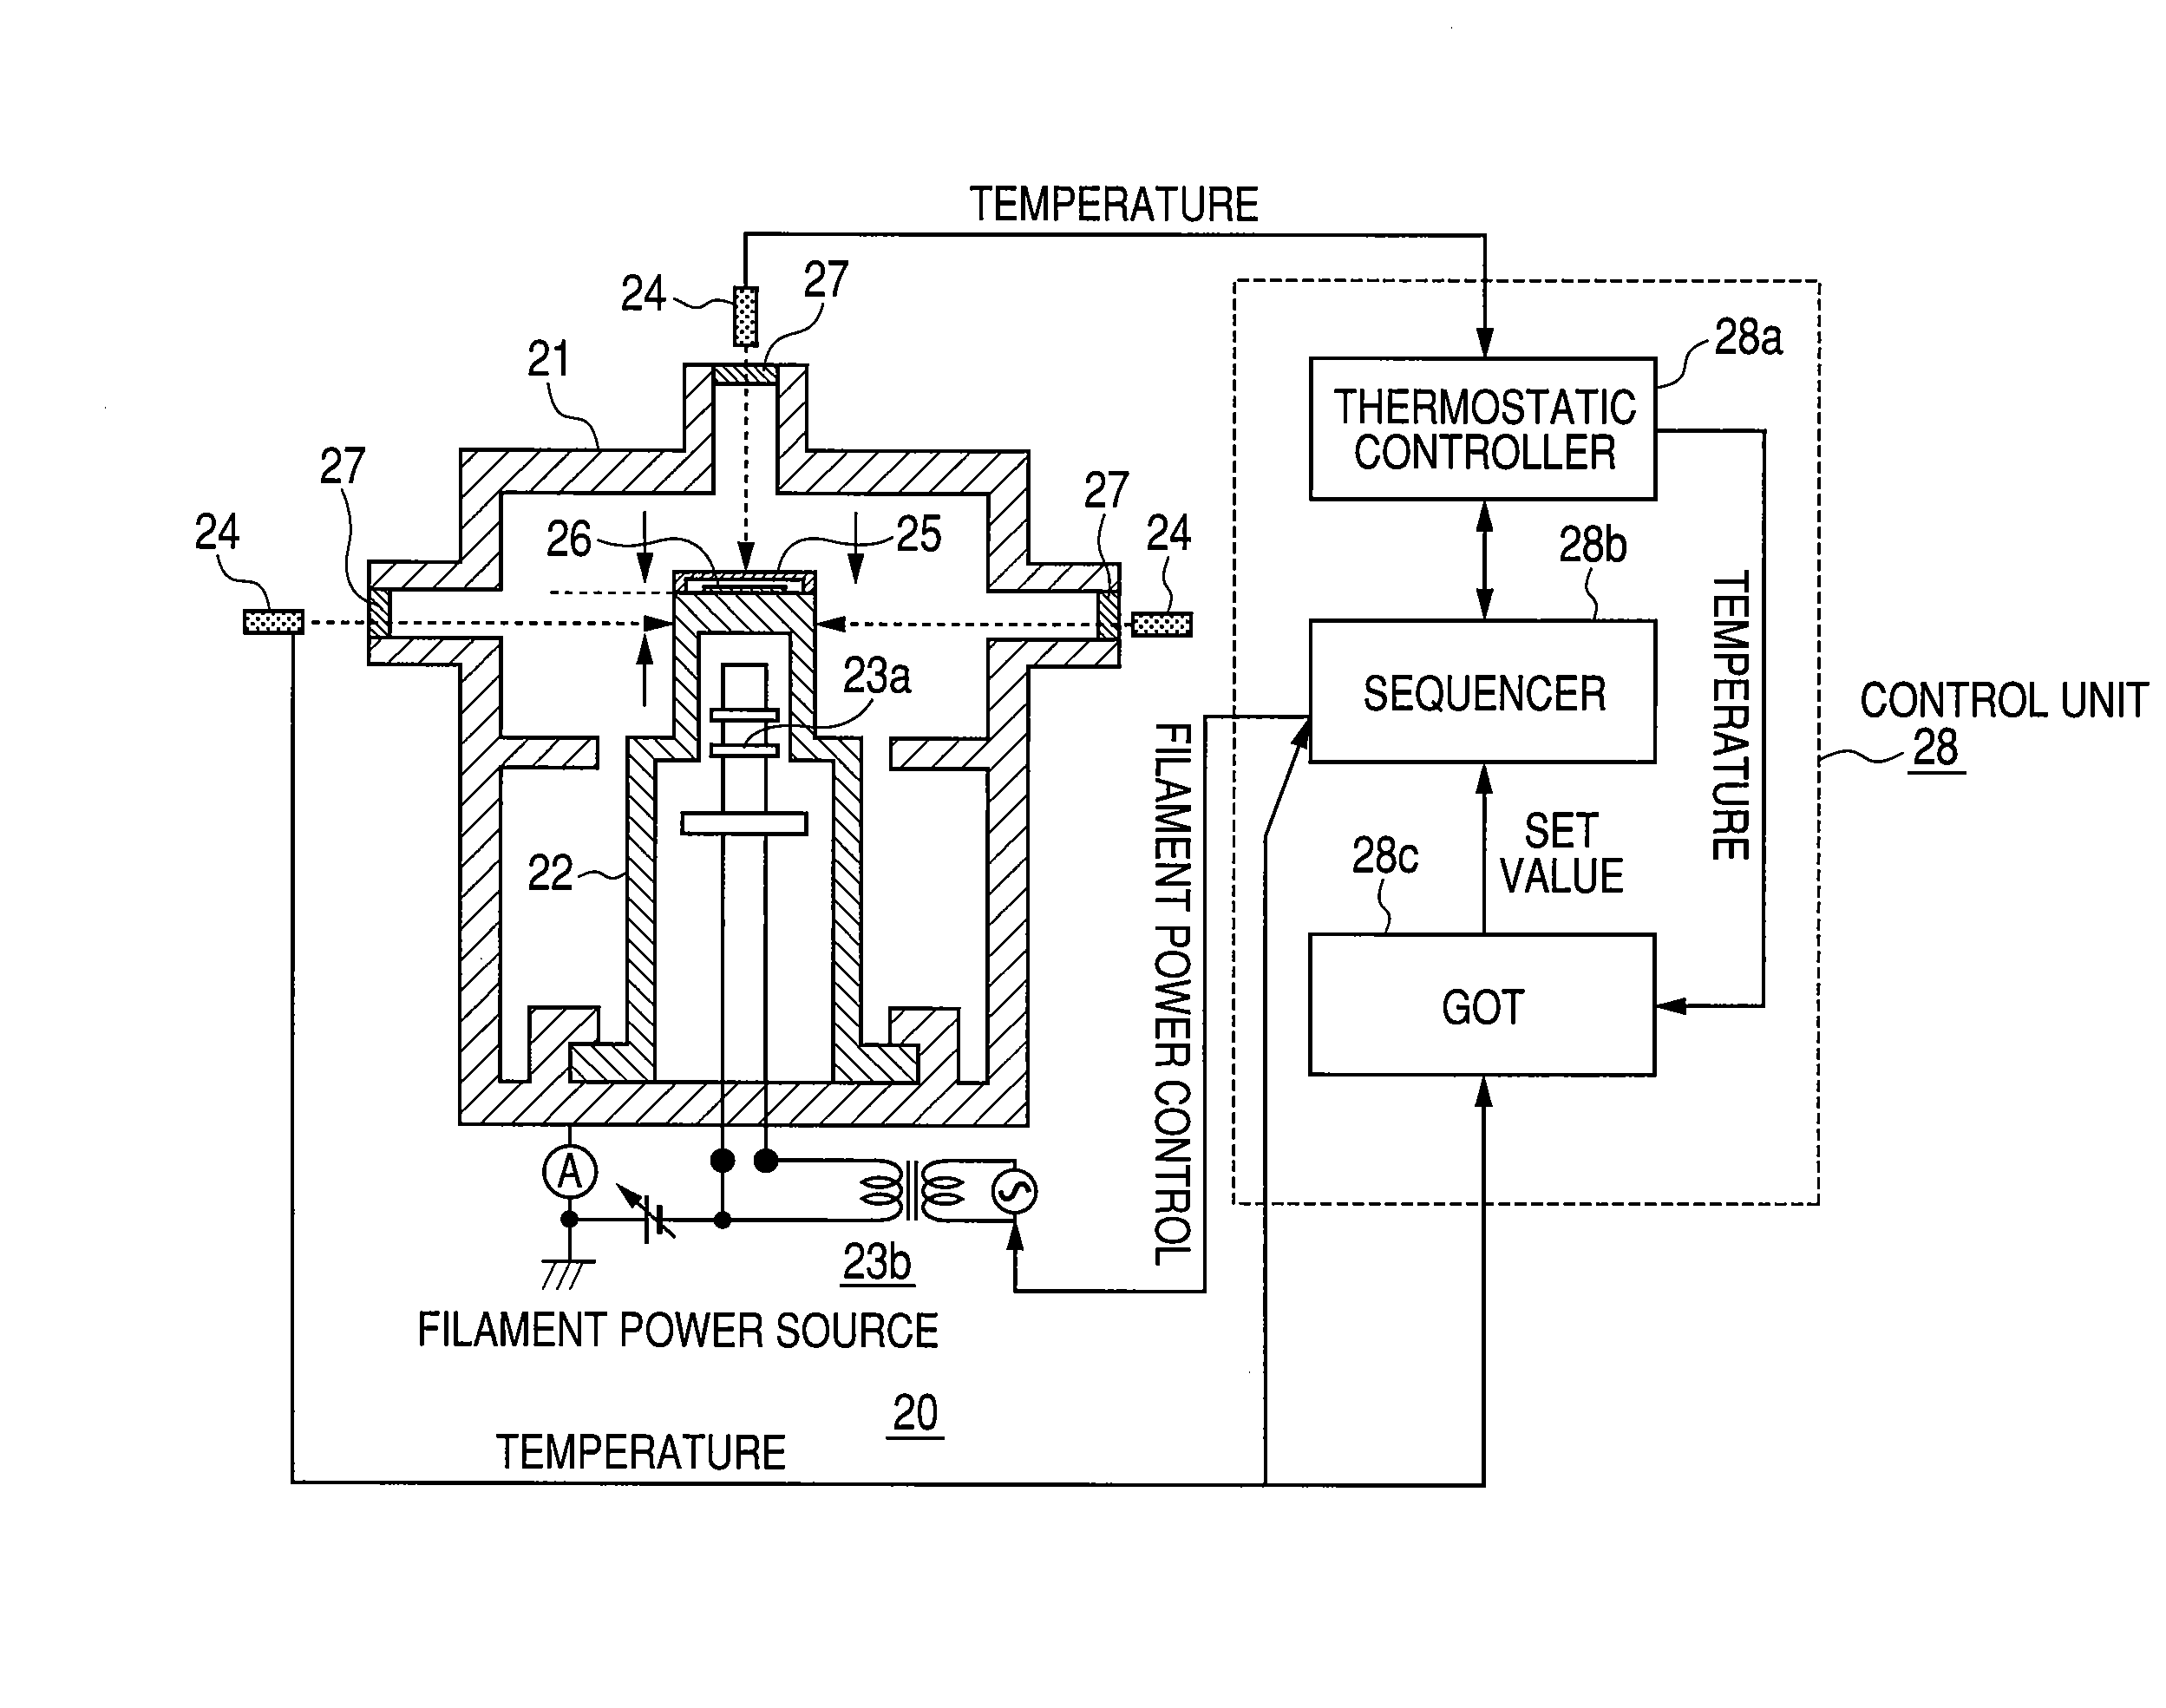 Heating process apparatus